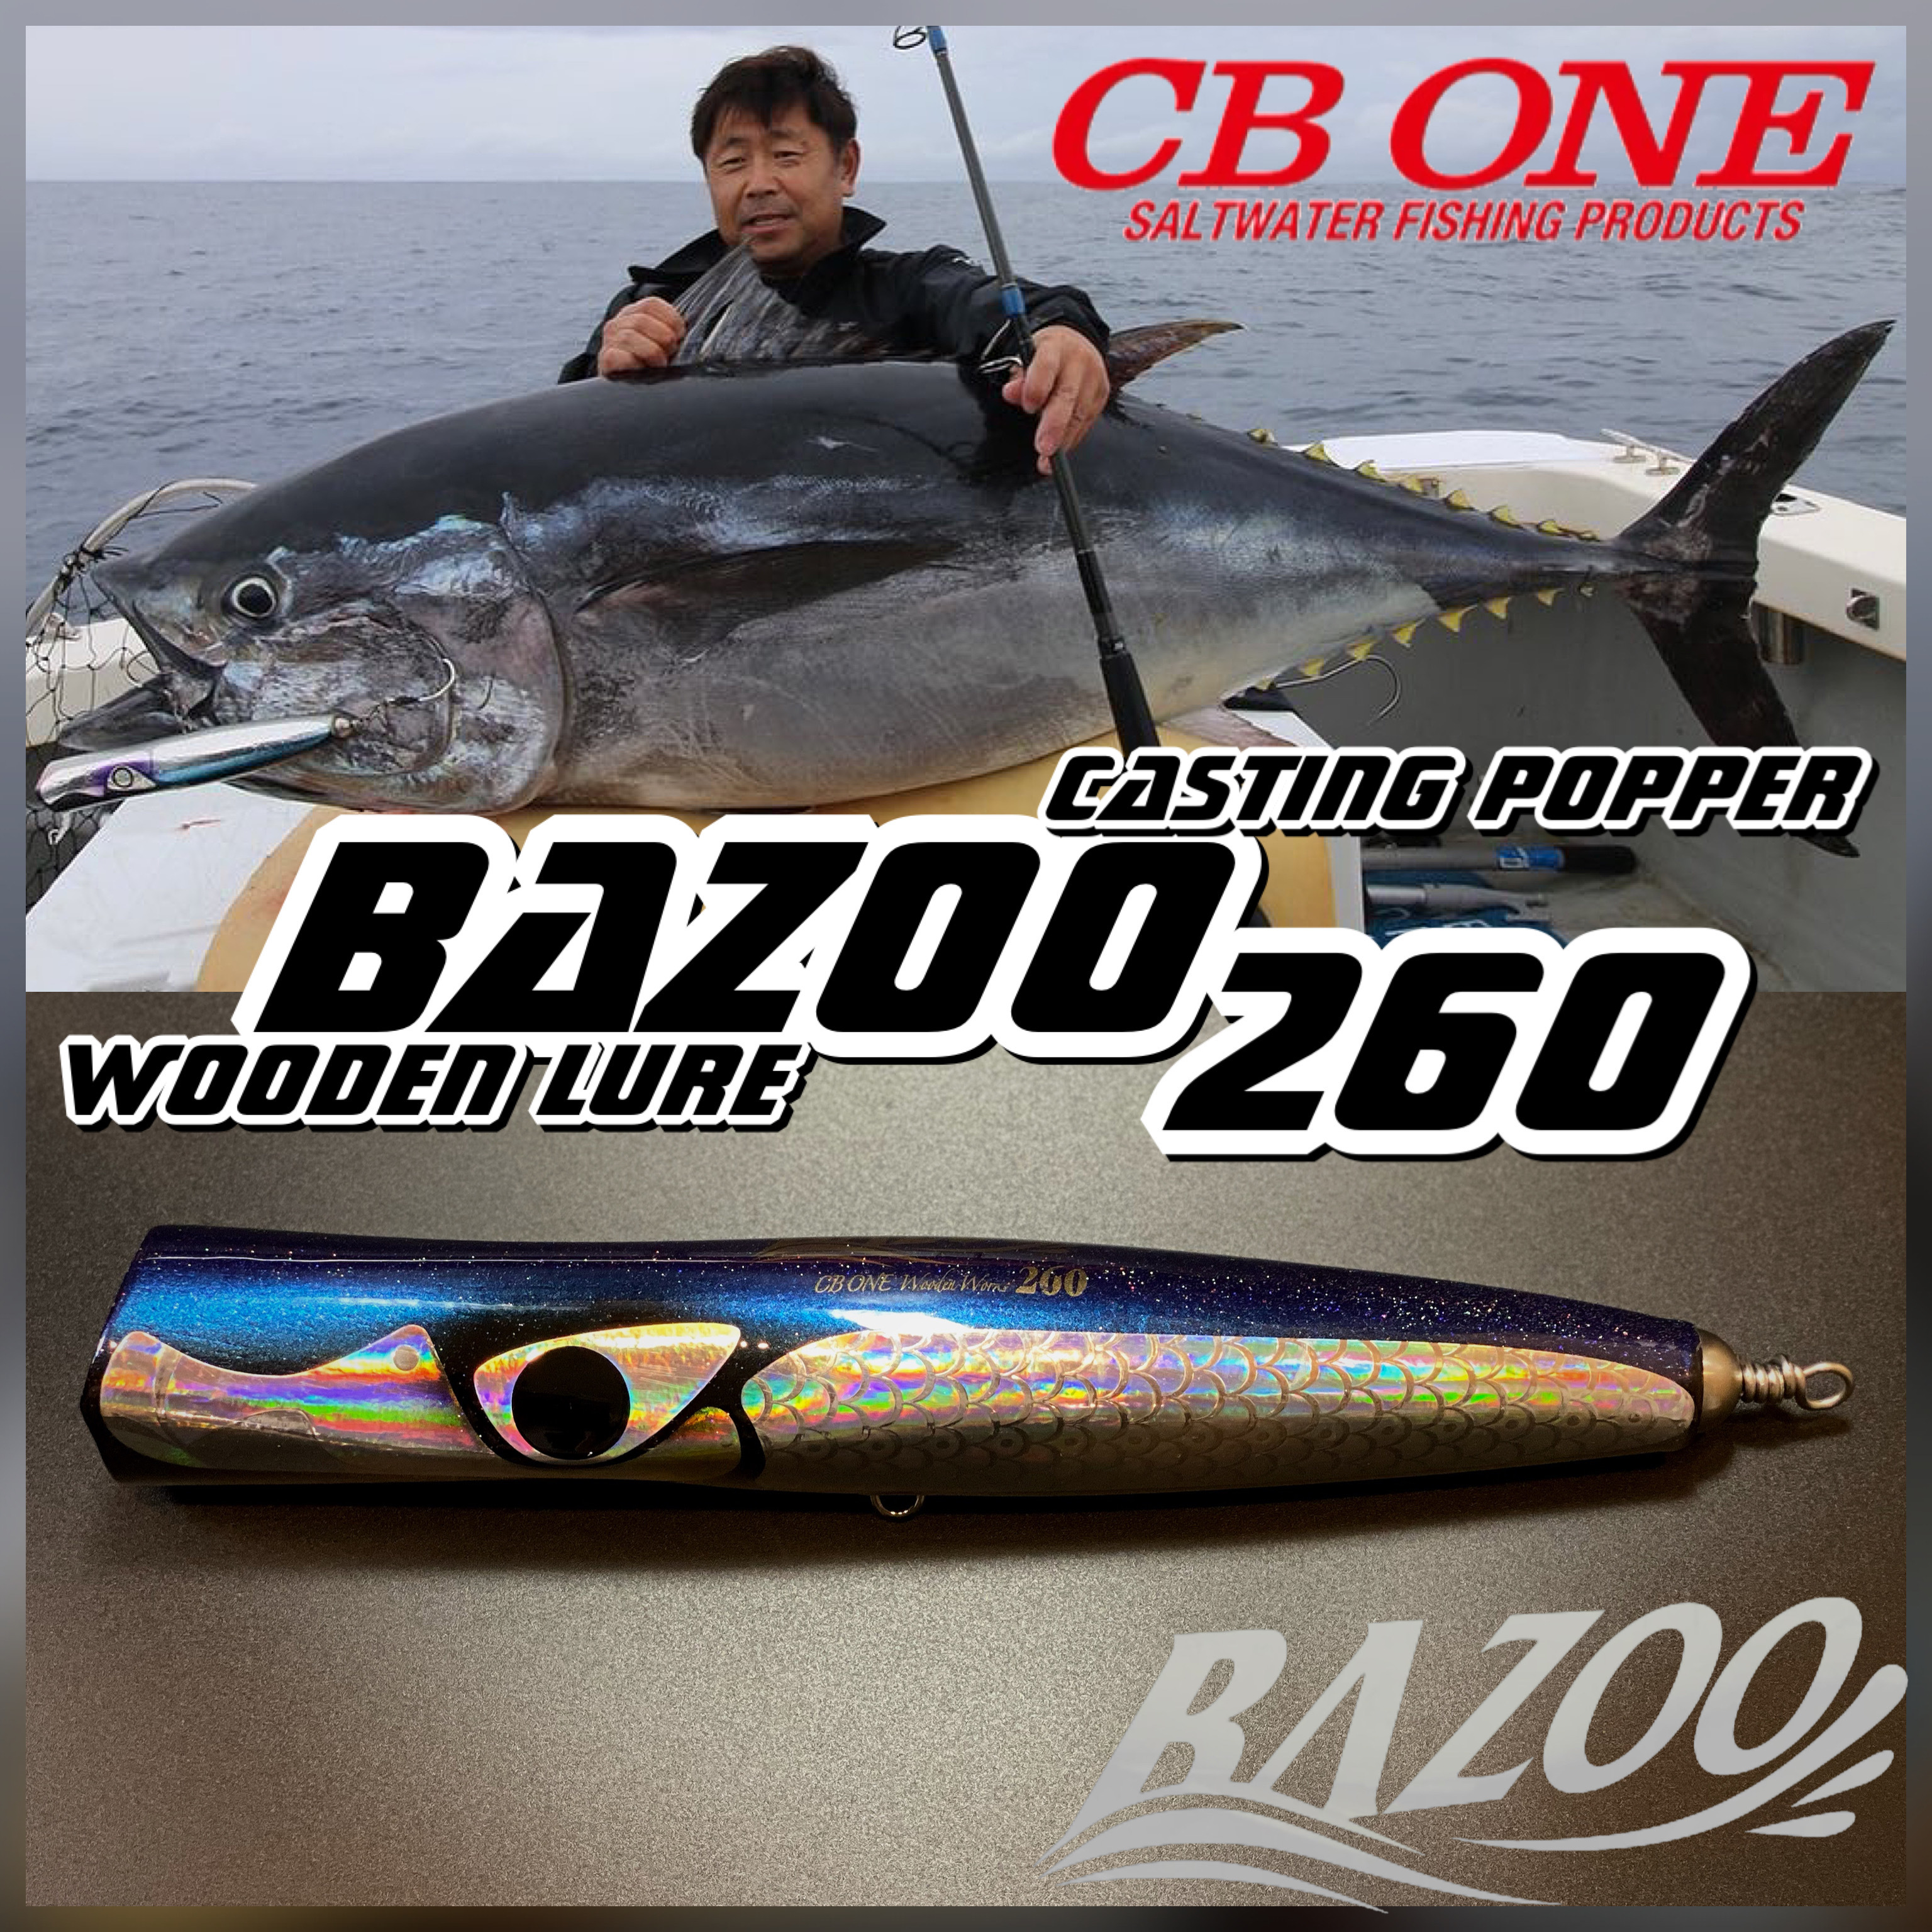 CB ONE BAZOO 260 CASTING WOODEN POPPER